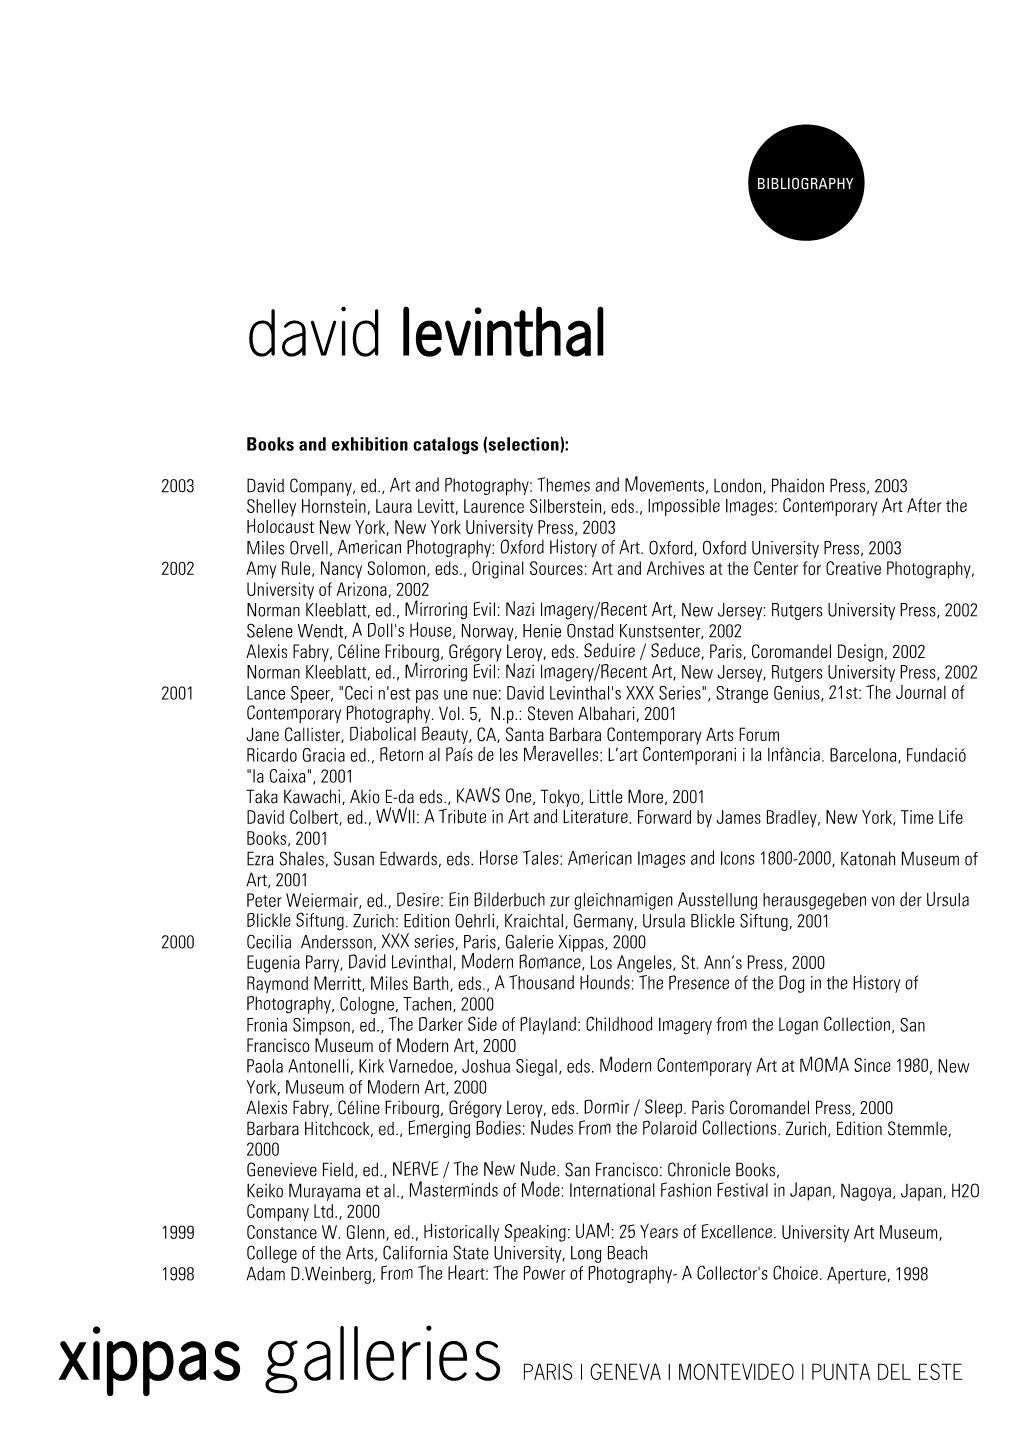 David Levinthal